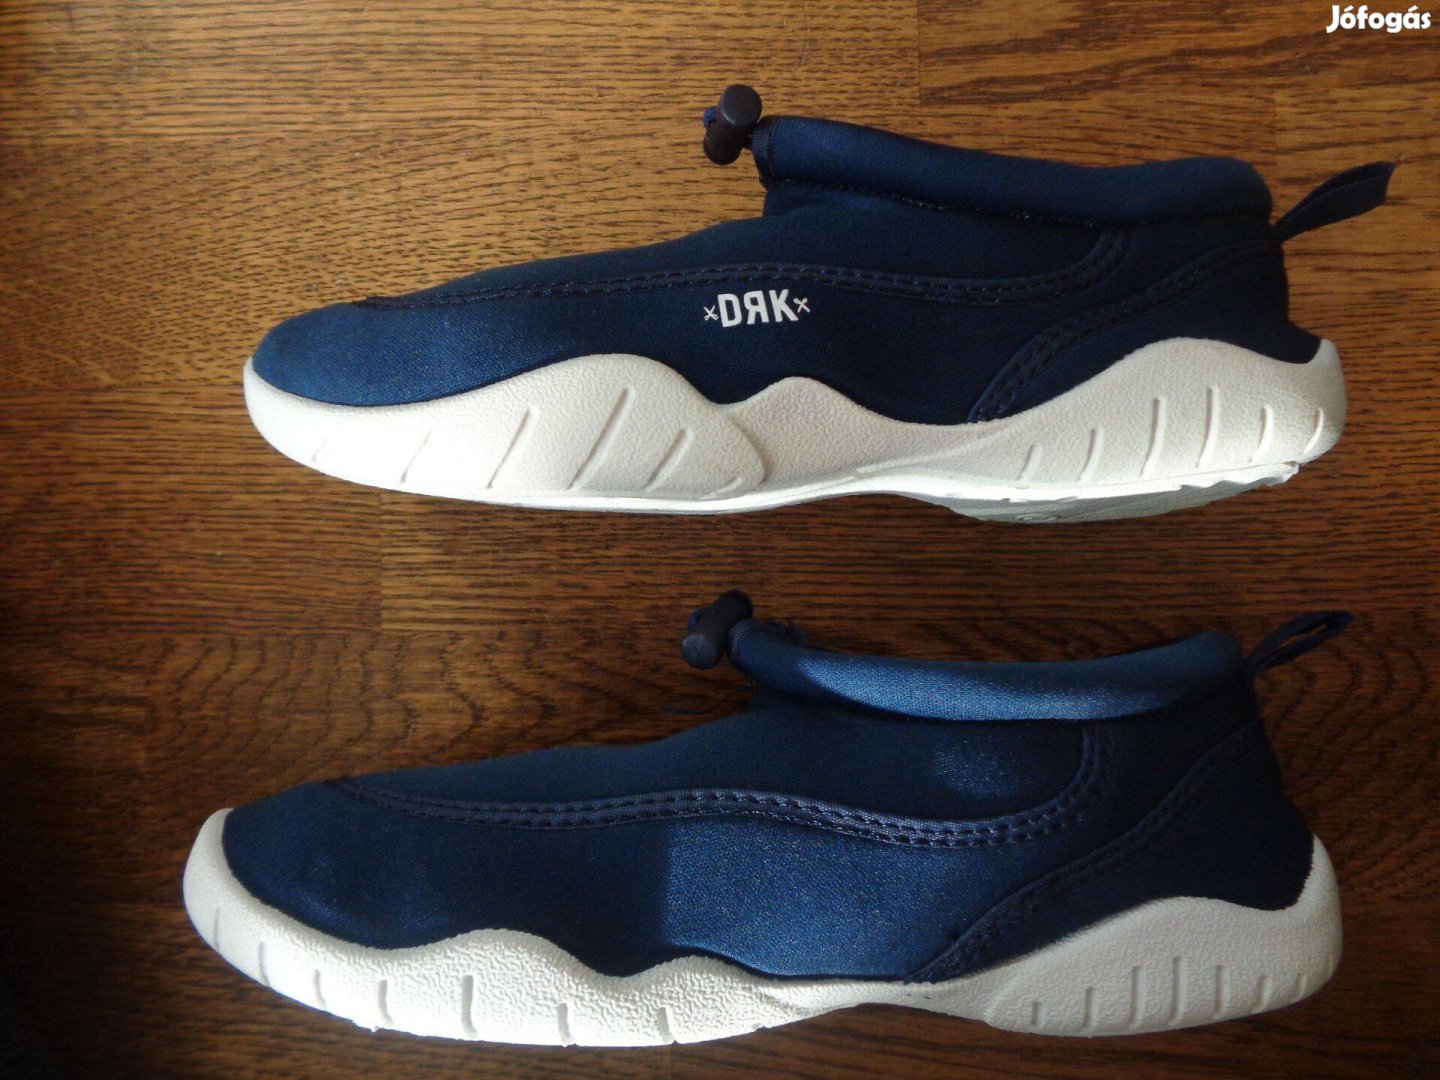 Új eredeti Dorko DRK Aquatic 29- es 29 gyerekcipő sportcipő utcai cipő